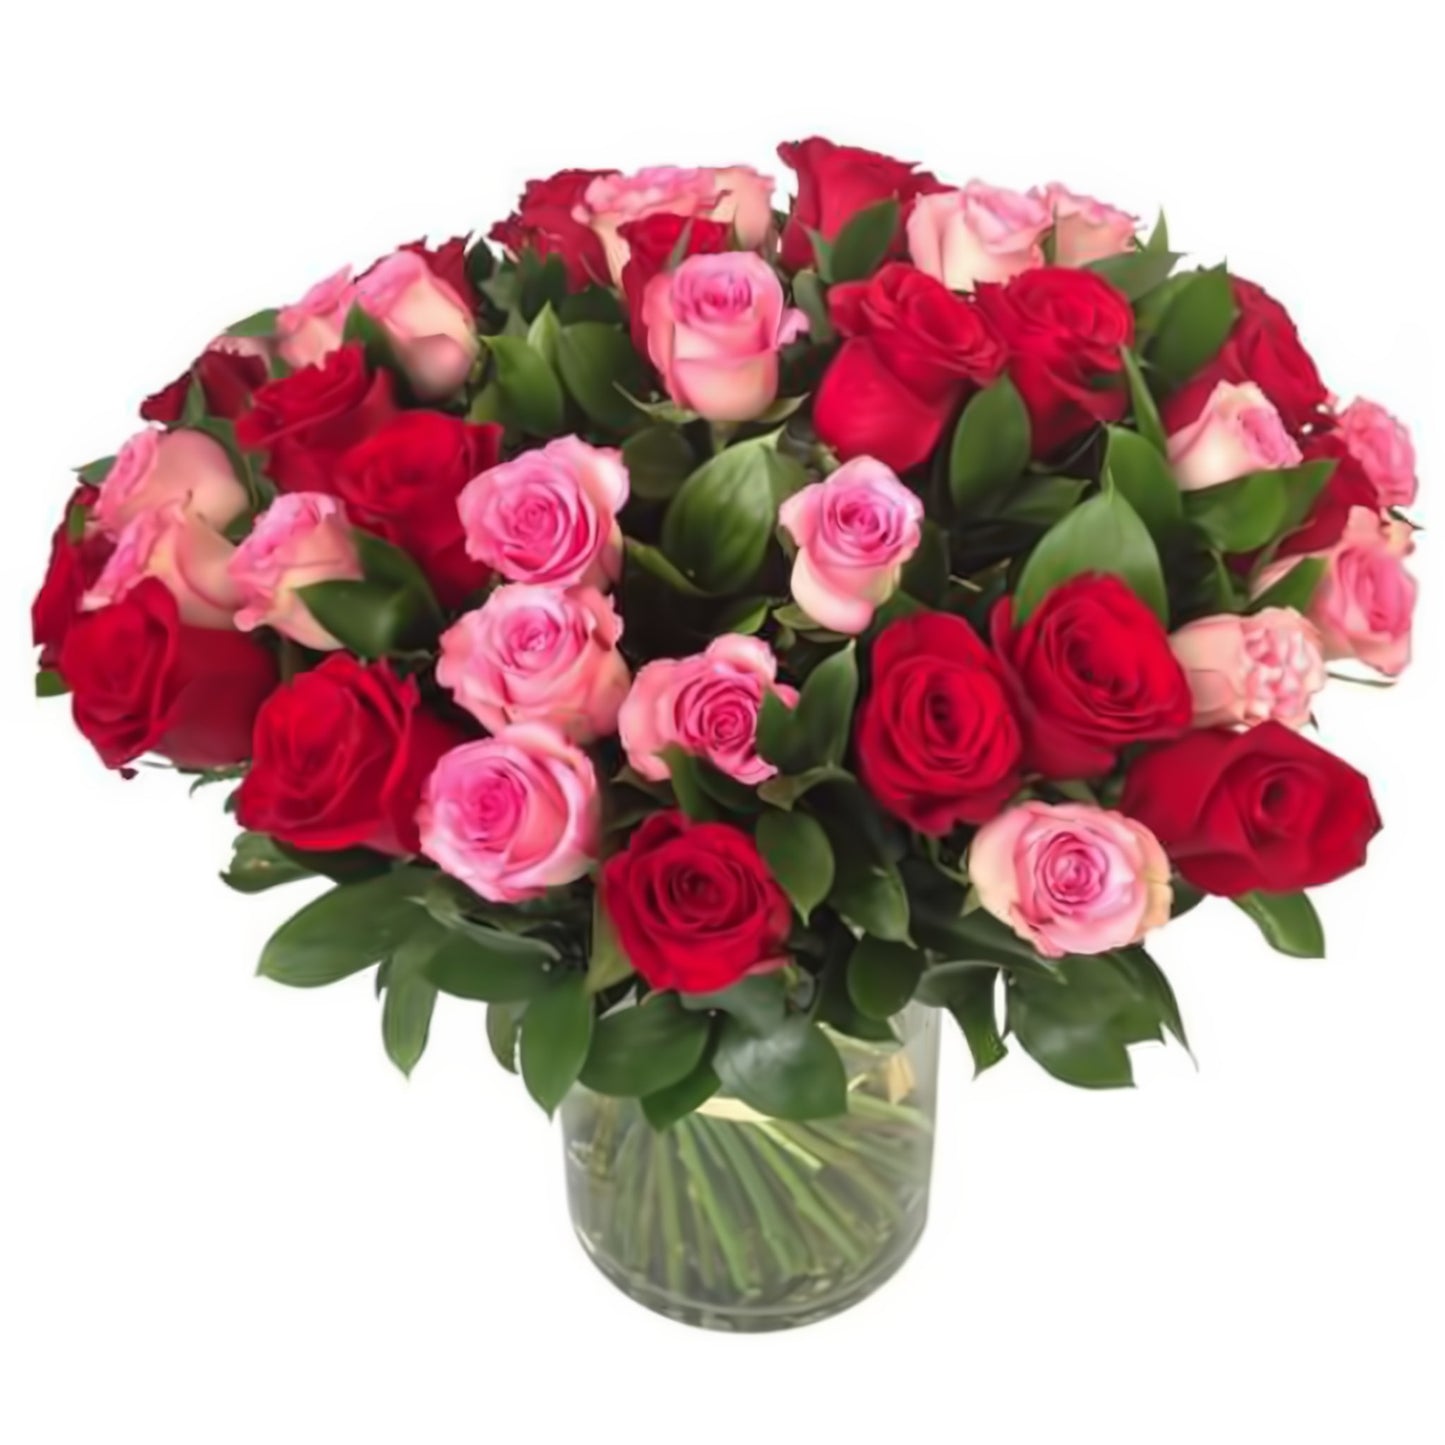 Fresh Roses in a Vase | 100 Red & Pink Roses - Floral Arrangement - Flower Delivery Brooklyn